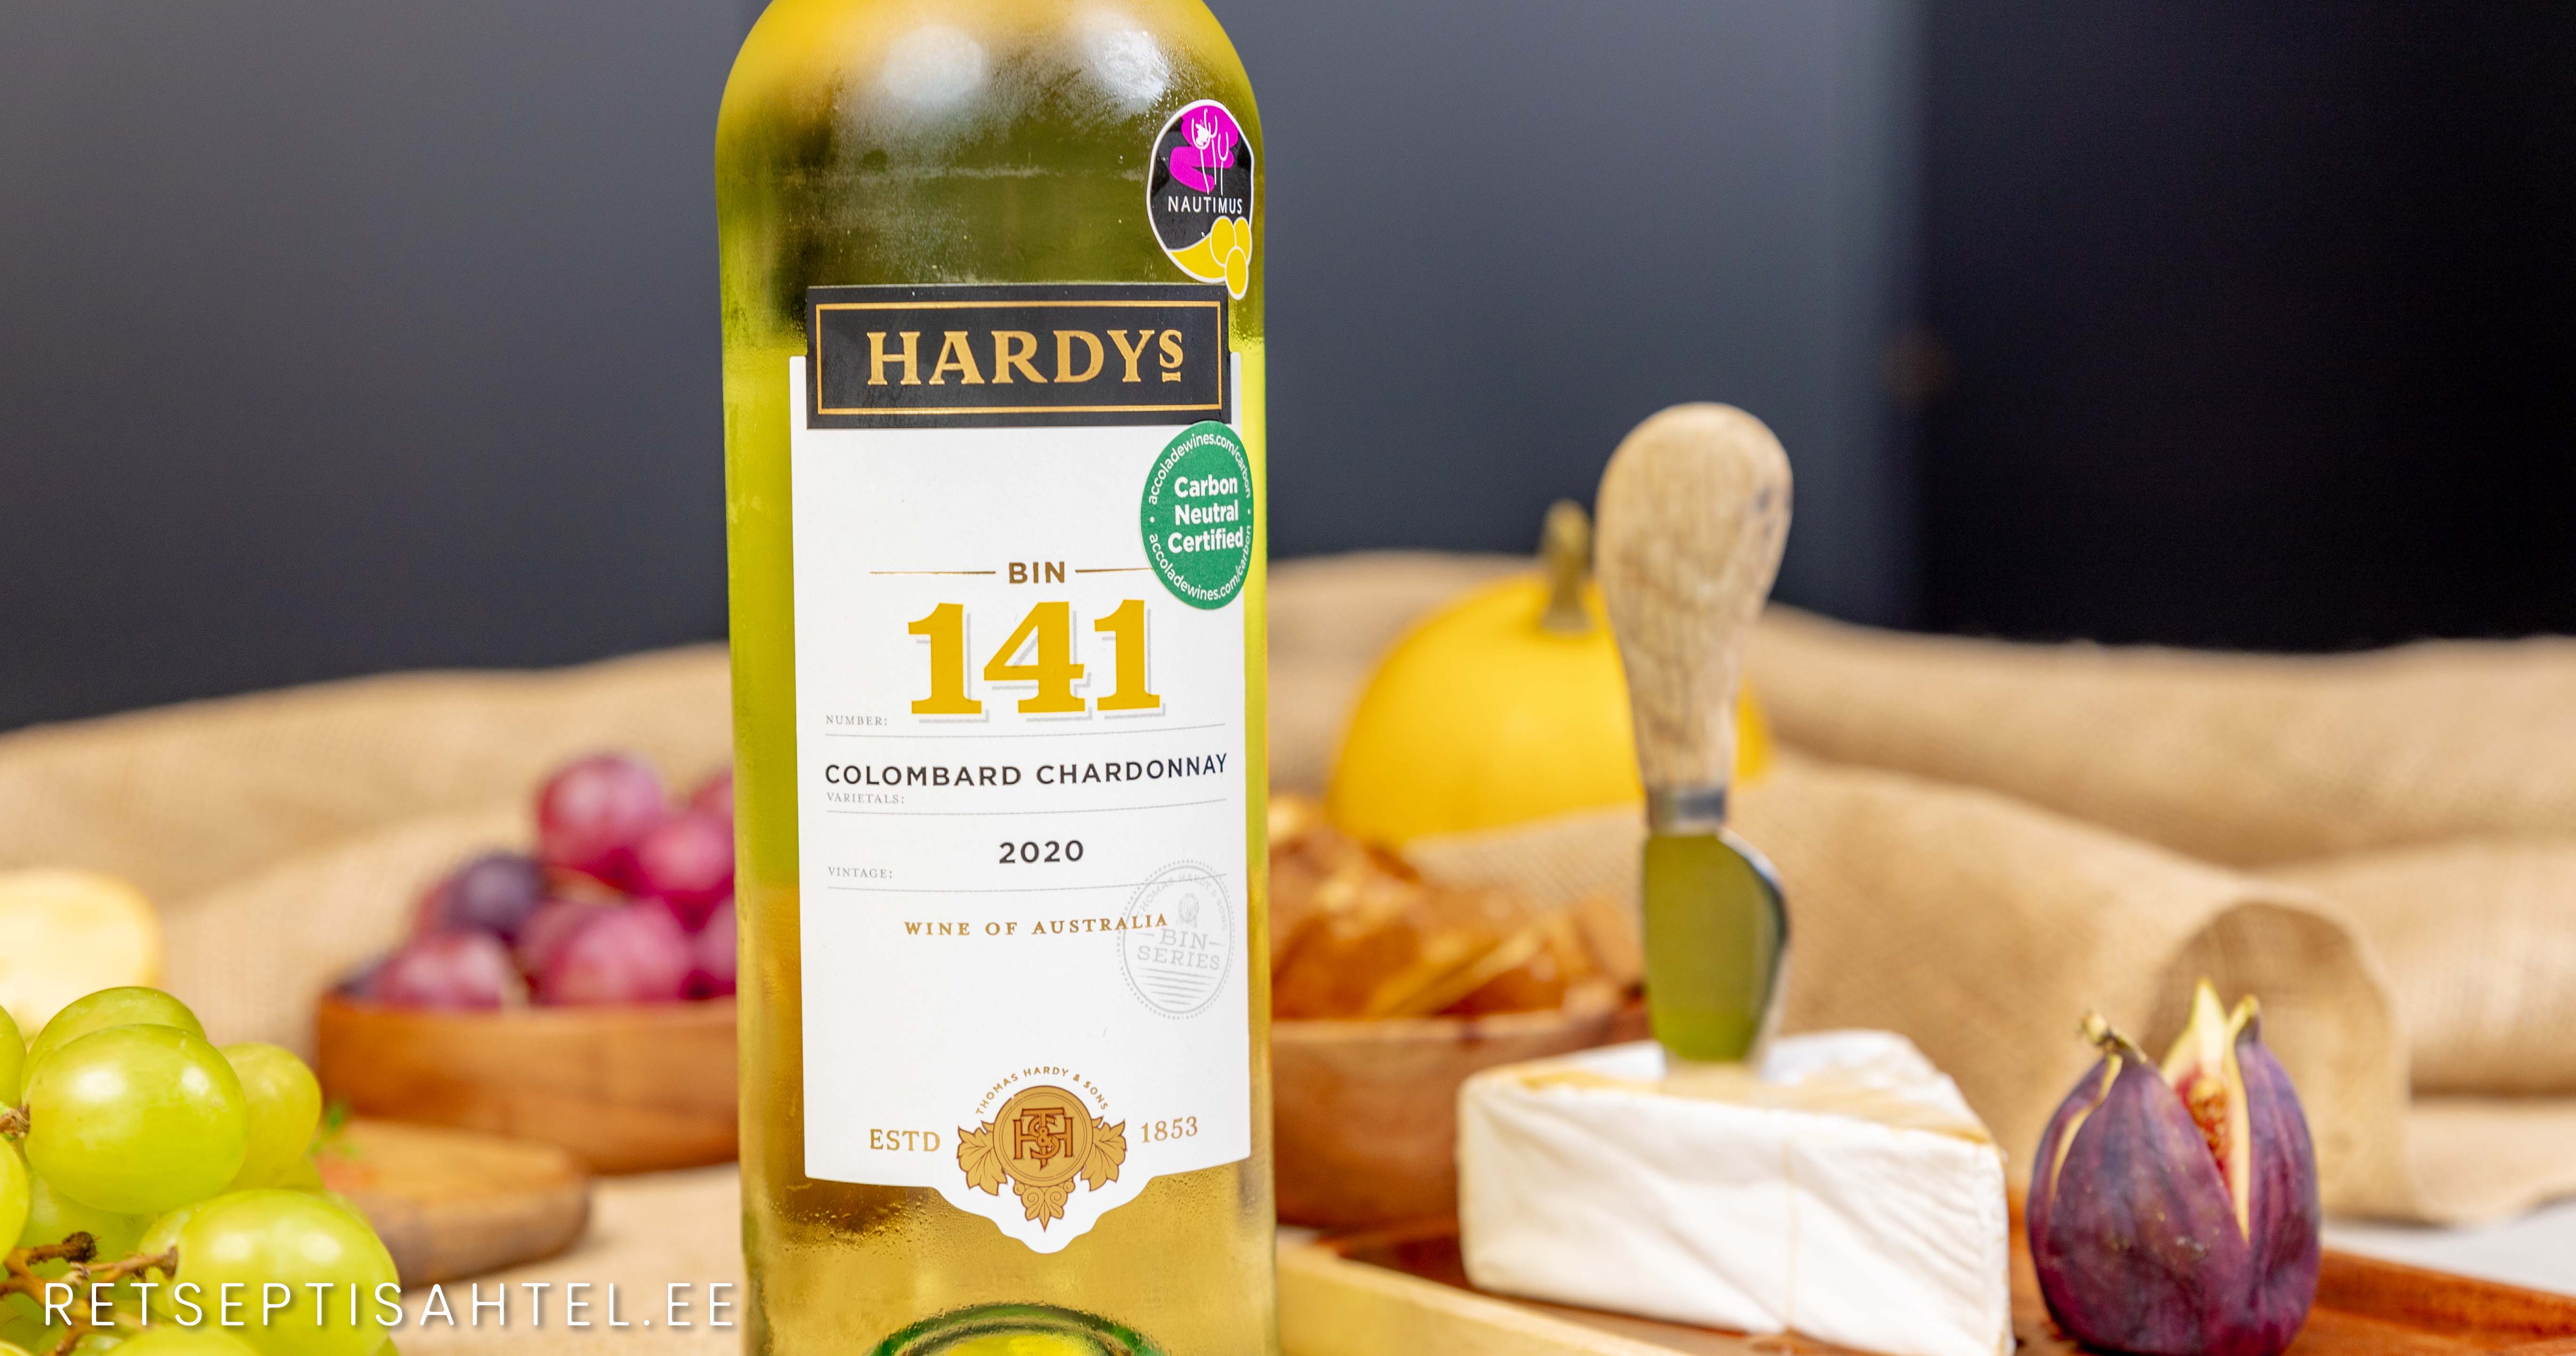 Hardys BIN 141 Colombard Chardonnay